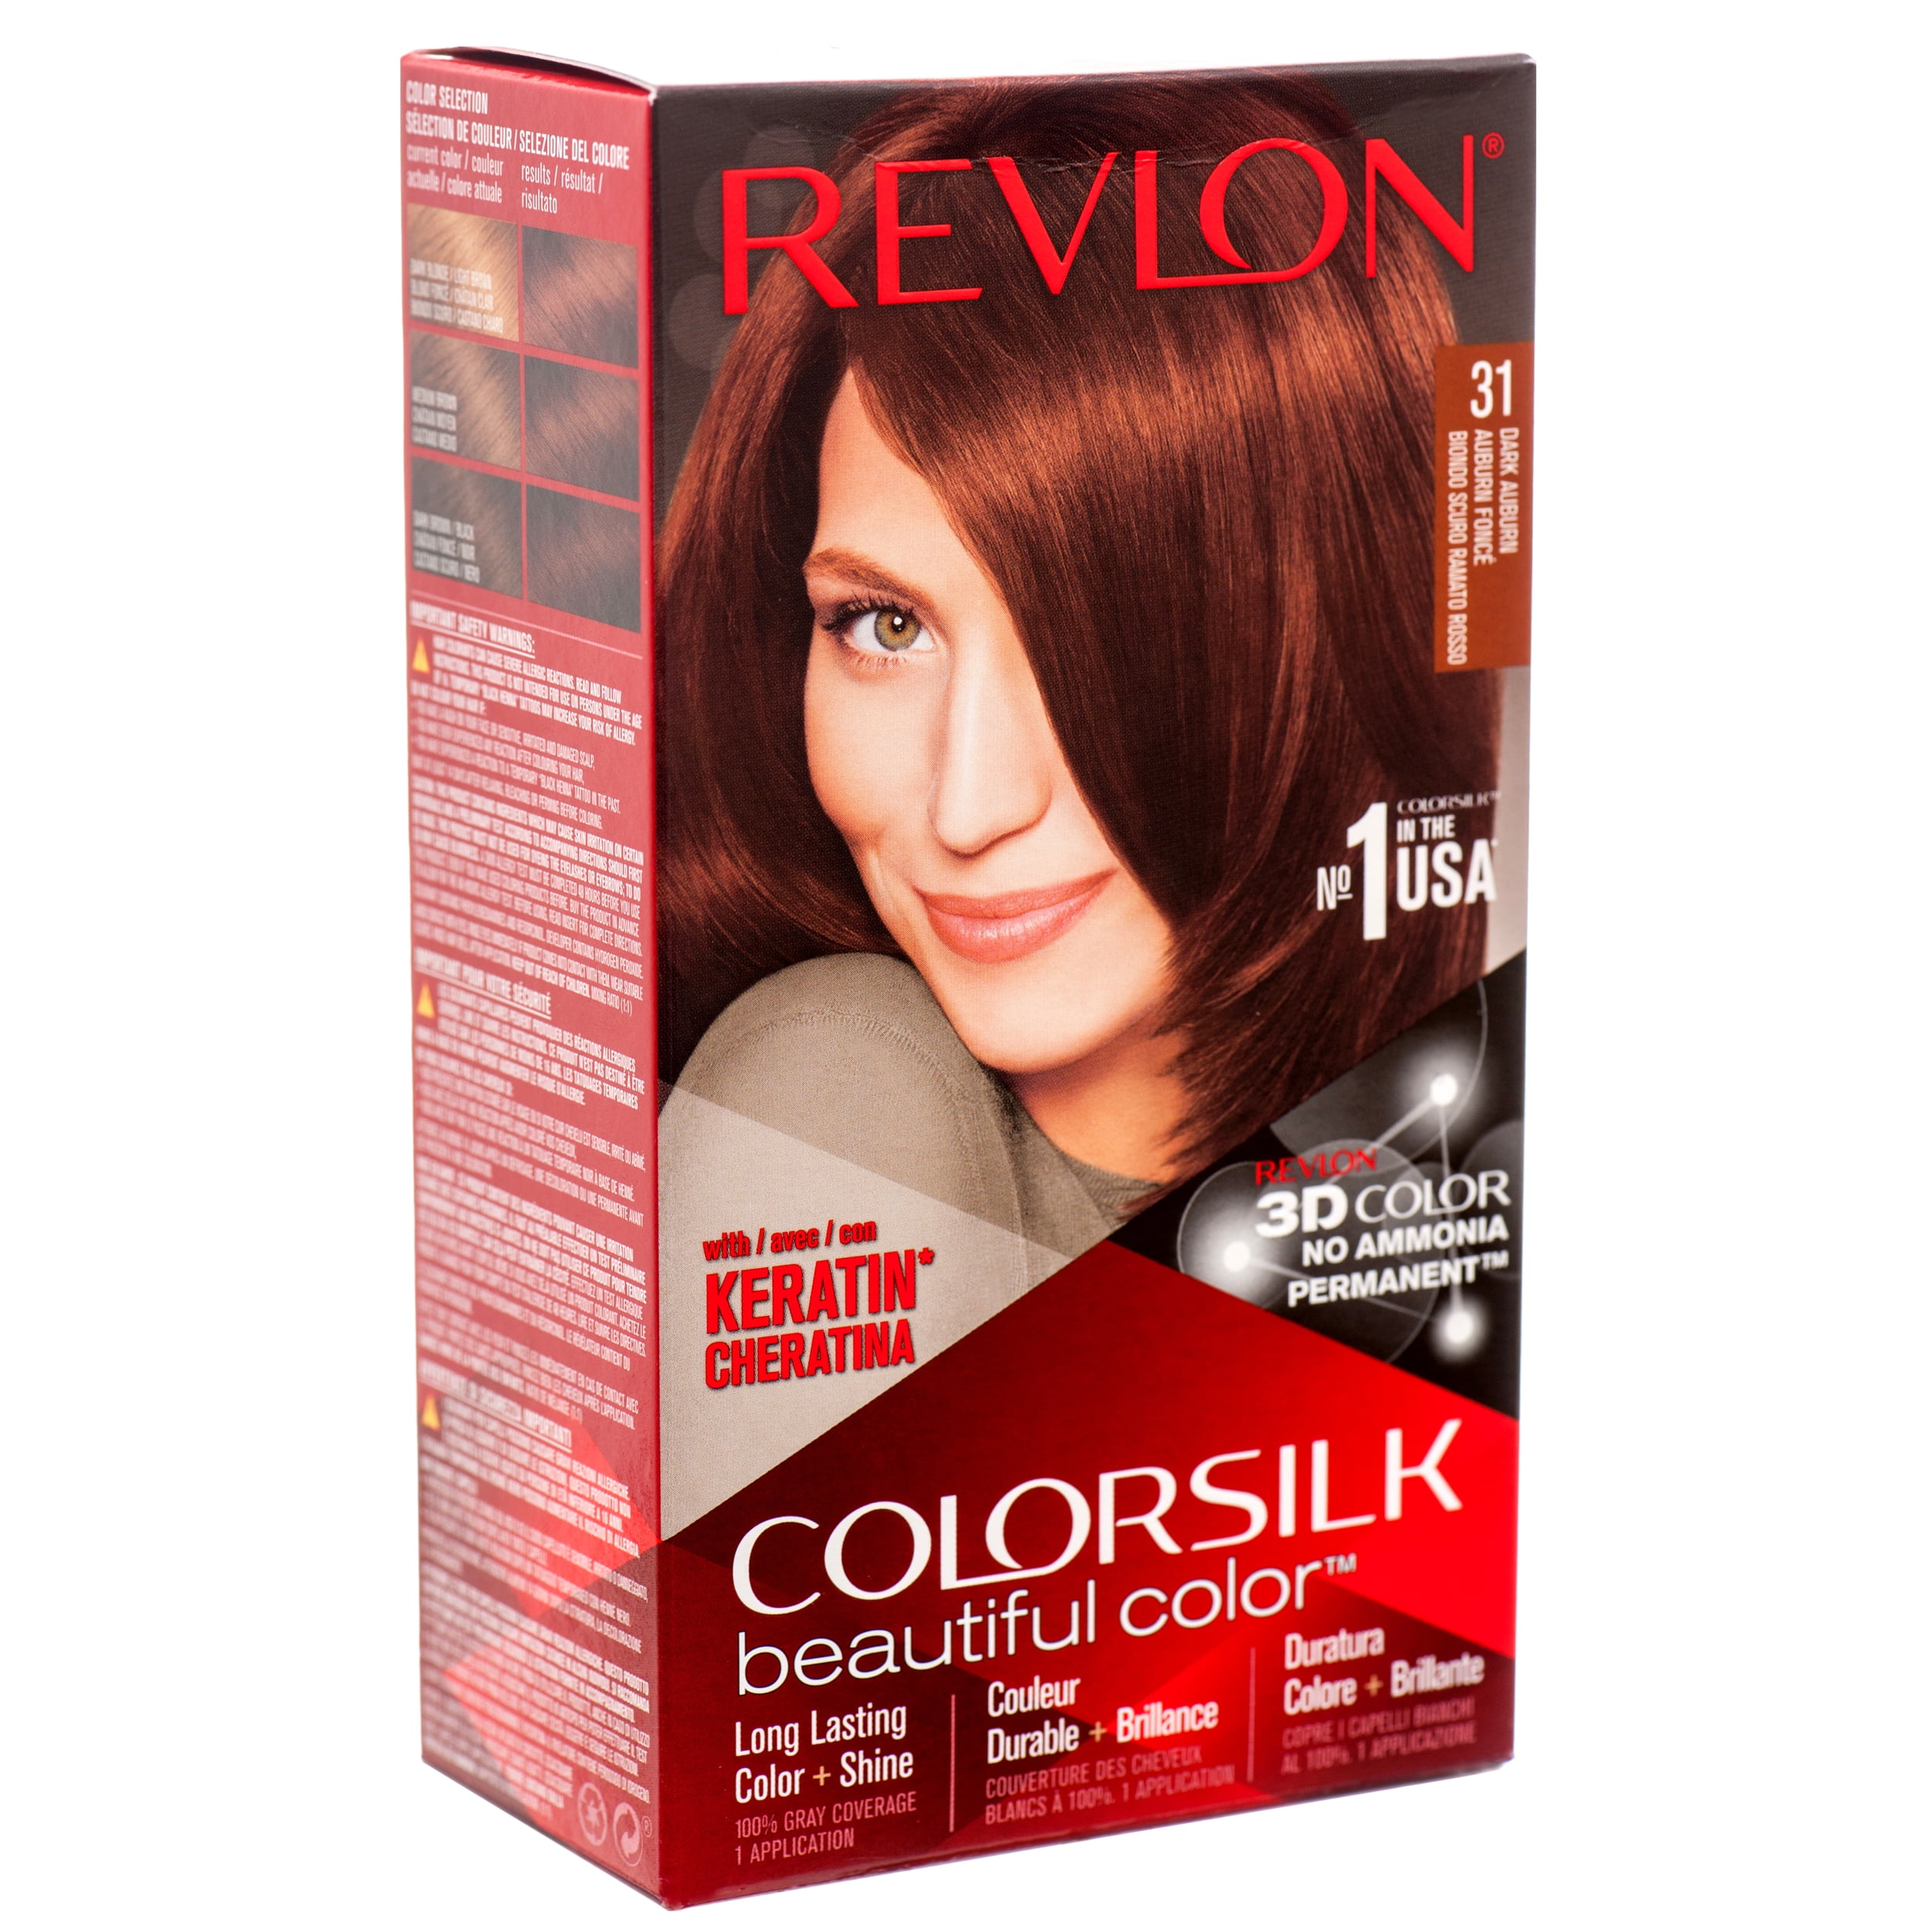 Revlon Colorsilk Beautiful Permanent Long Lasting Color Hair Dye with 3D  Color and Keratin, 31 Dark Auburn, 2 PACK 